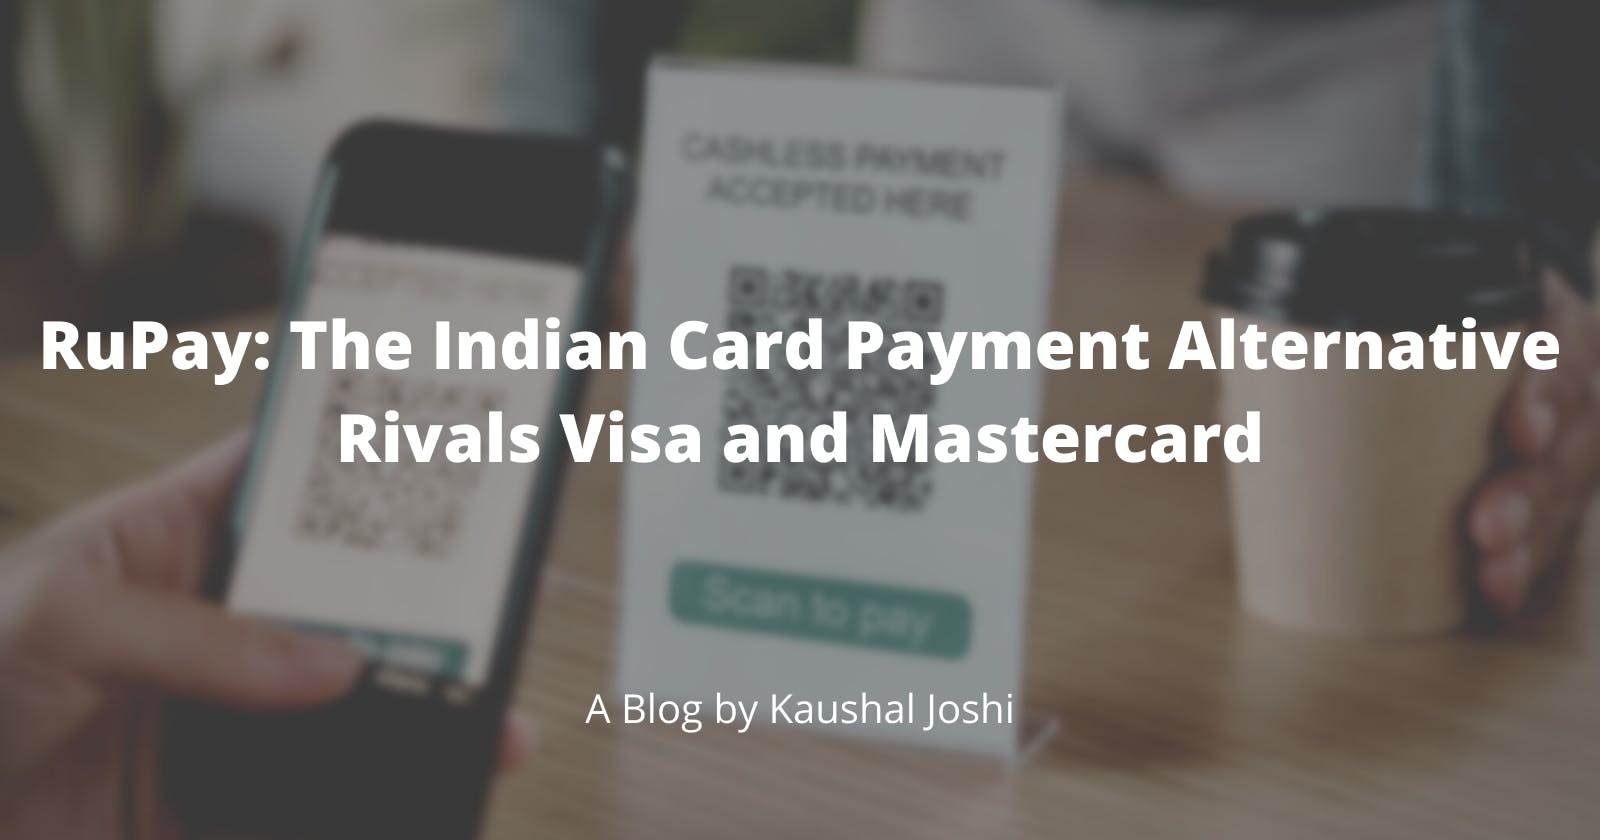 RuPay: The Indian Card Payment Alternative Rivals Visa and Mastercard